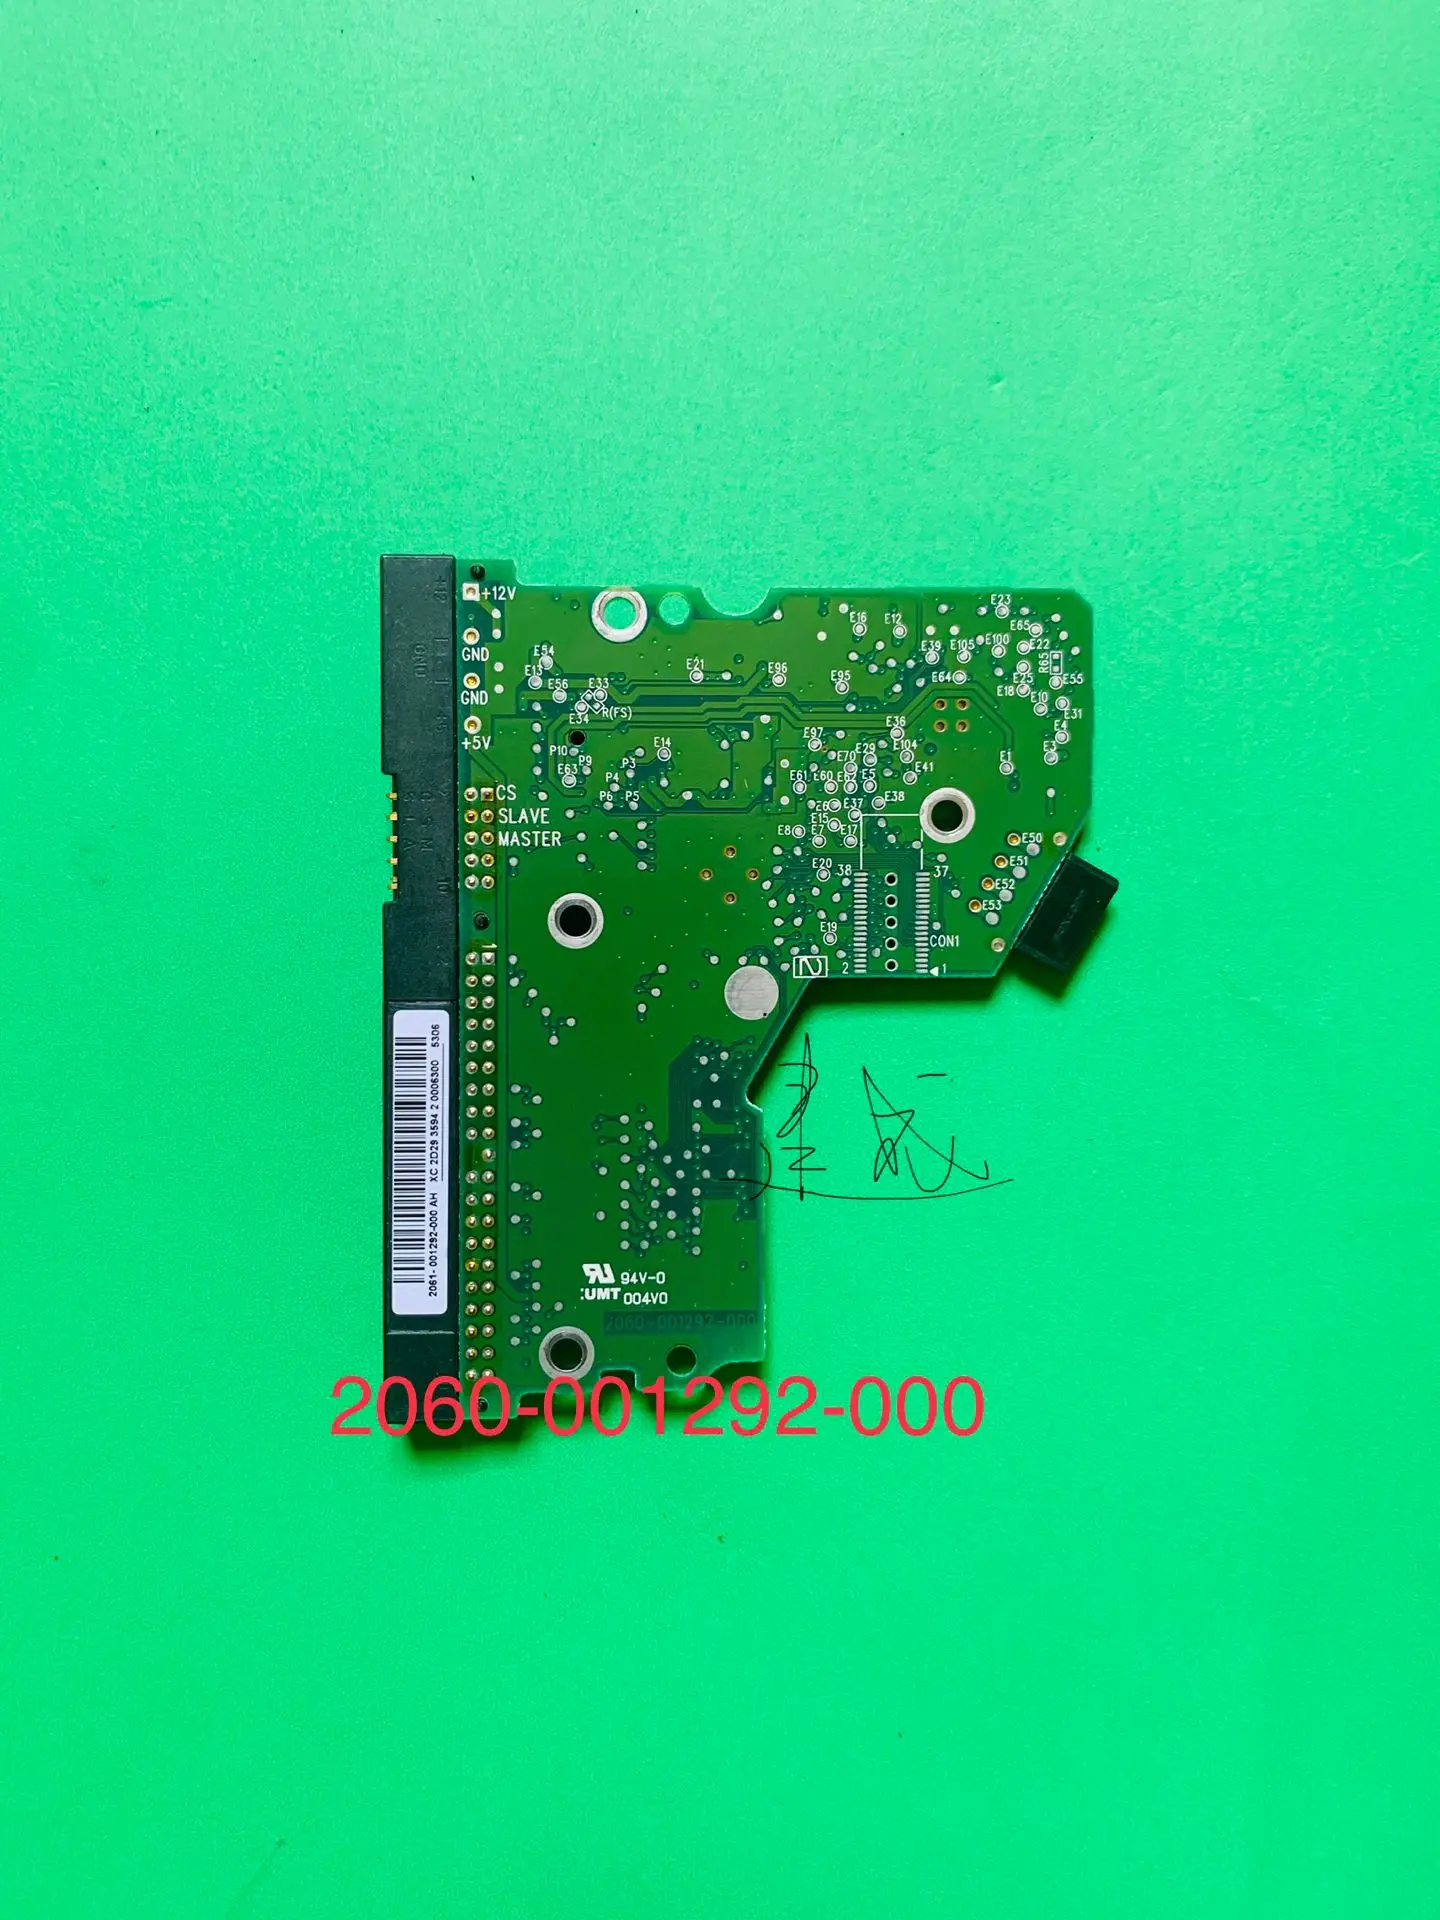 PCB Logic Board 2060-001292-000 REV A สำหรับ WD 3.5 IDE/PATA ฮาร์ดไดรฟ์ซ่อมการกู้คืนข้อมูล WD800BB